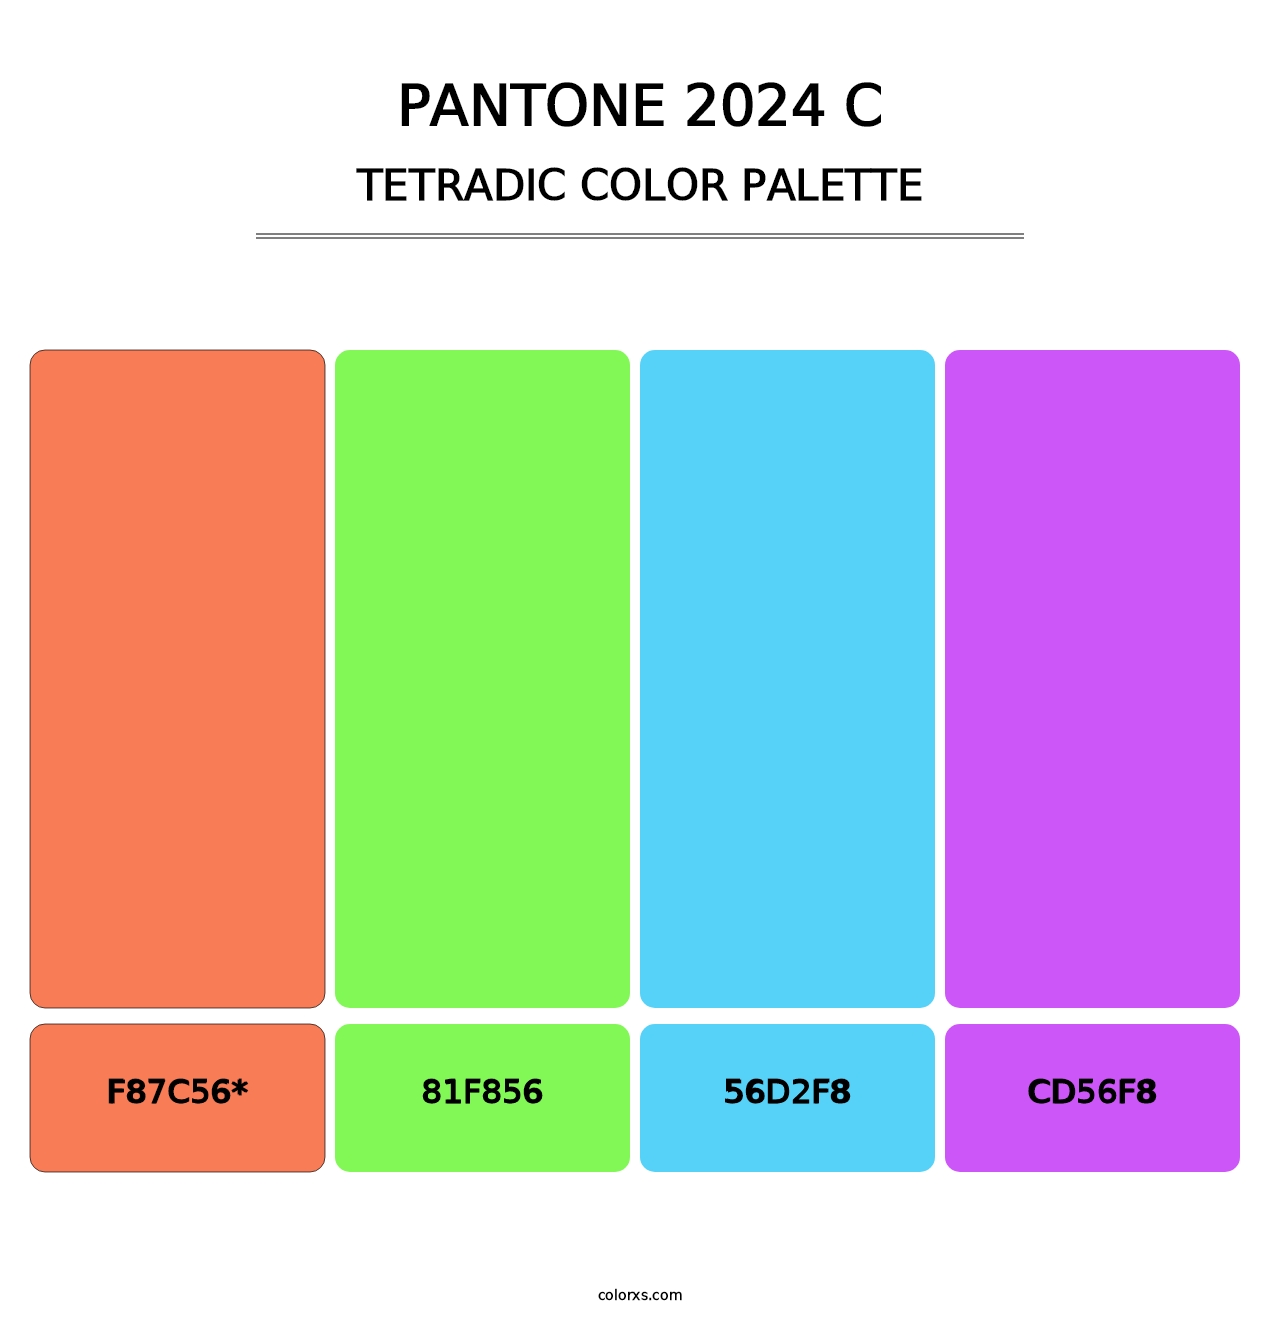 PANTONE 2024 C - Tetradic Color Palette